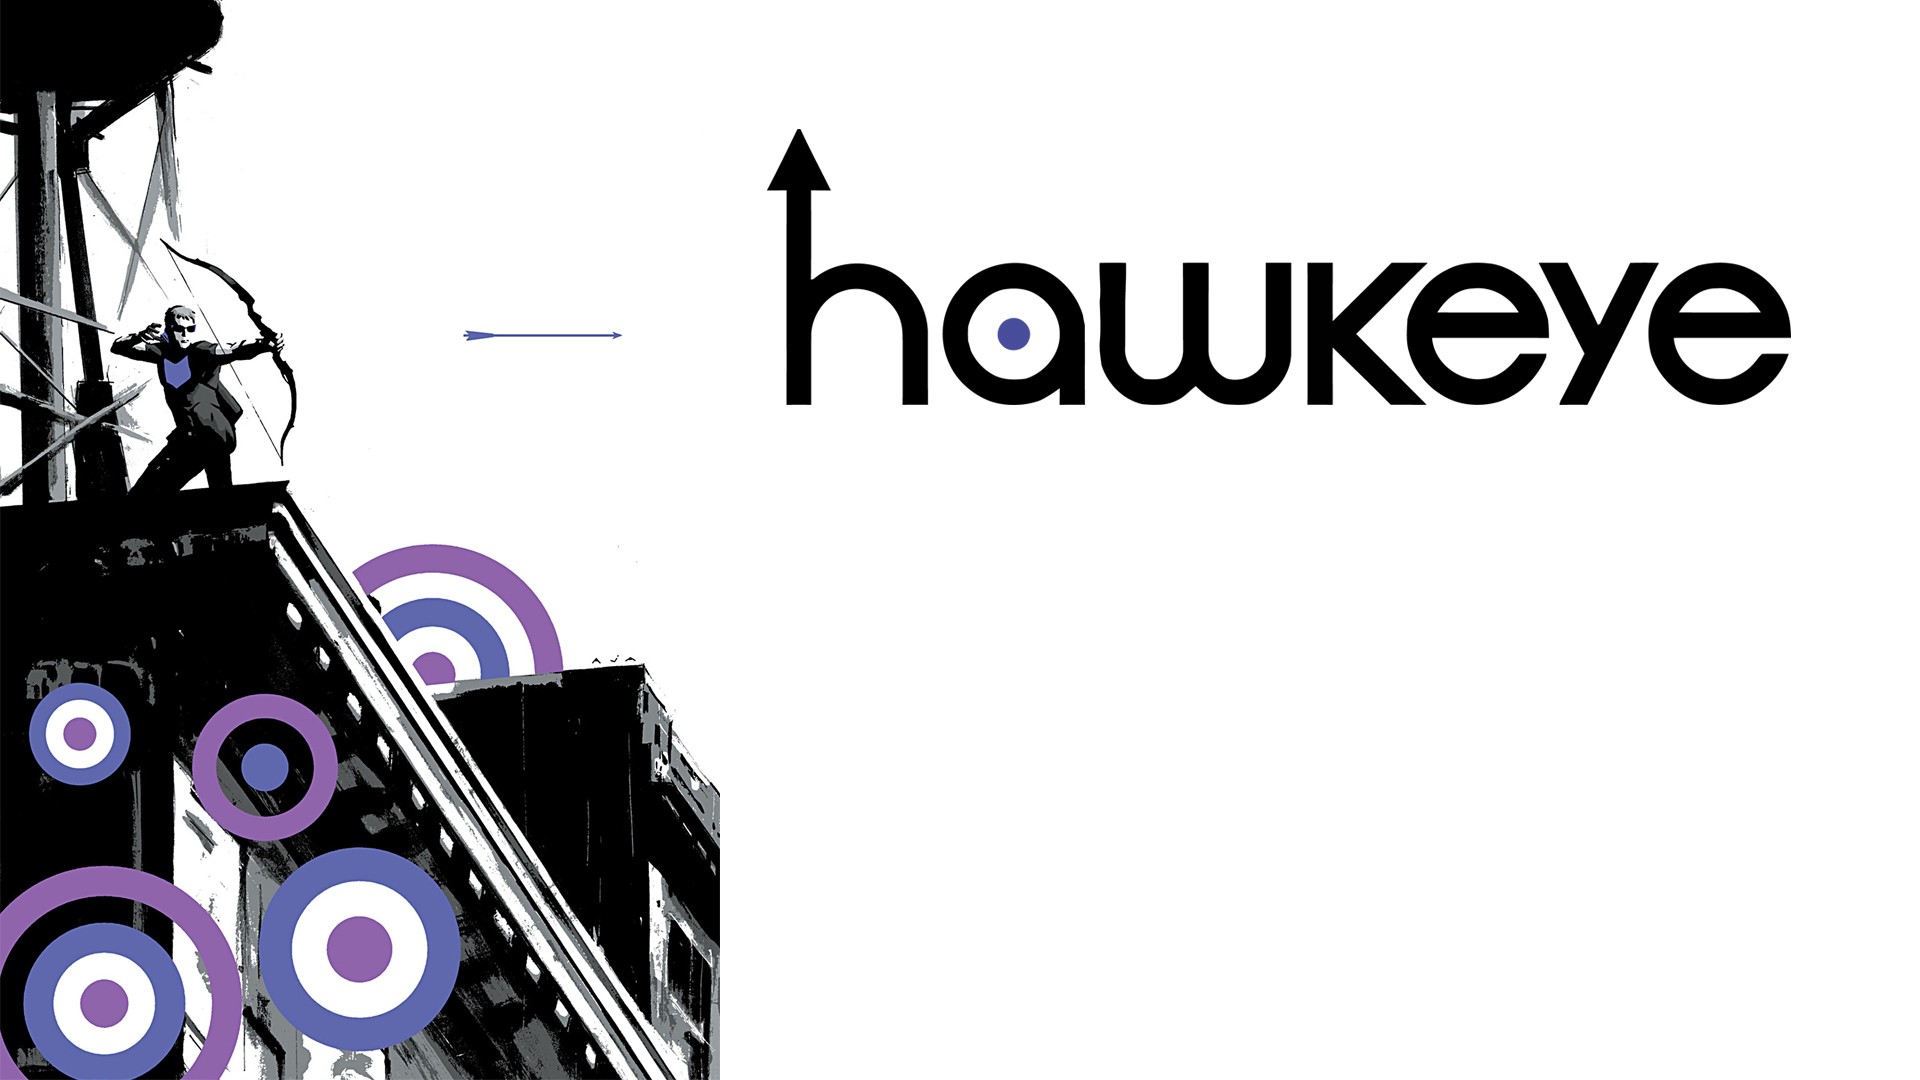 Hawkeye HD Wallpaper Background Image Id